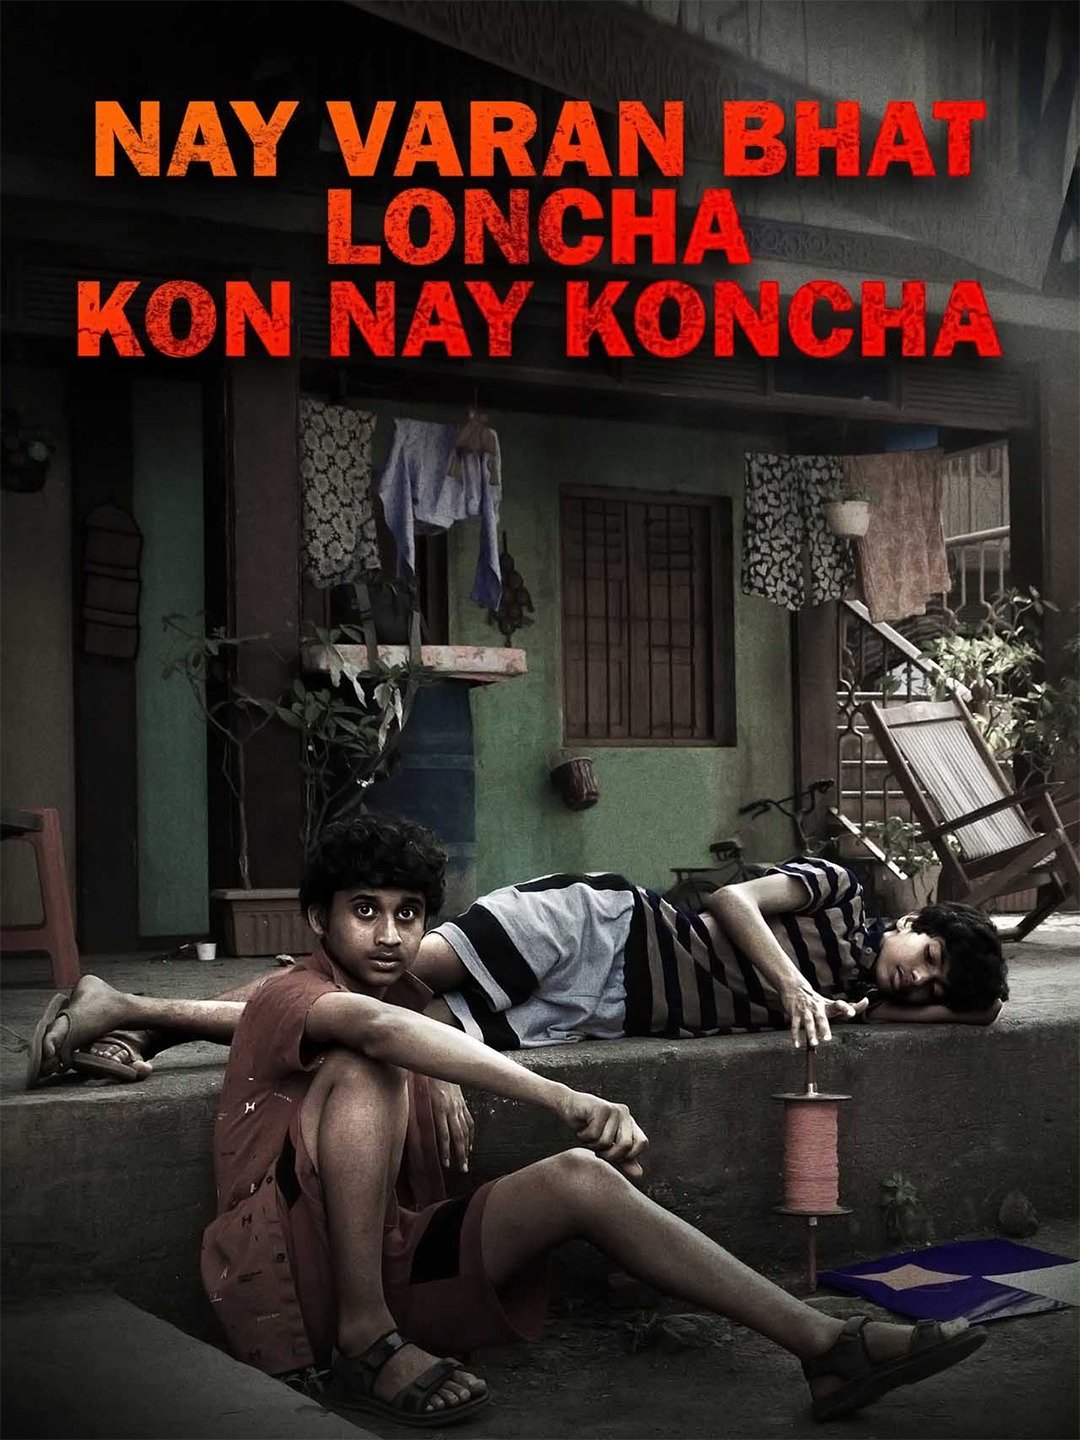 Nay varan bhat loncha online